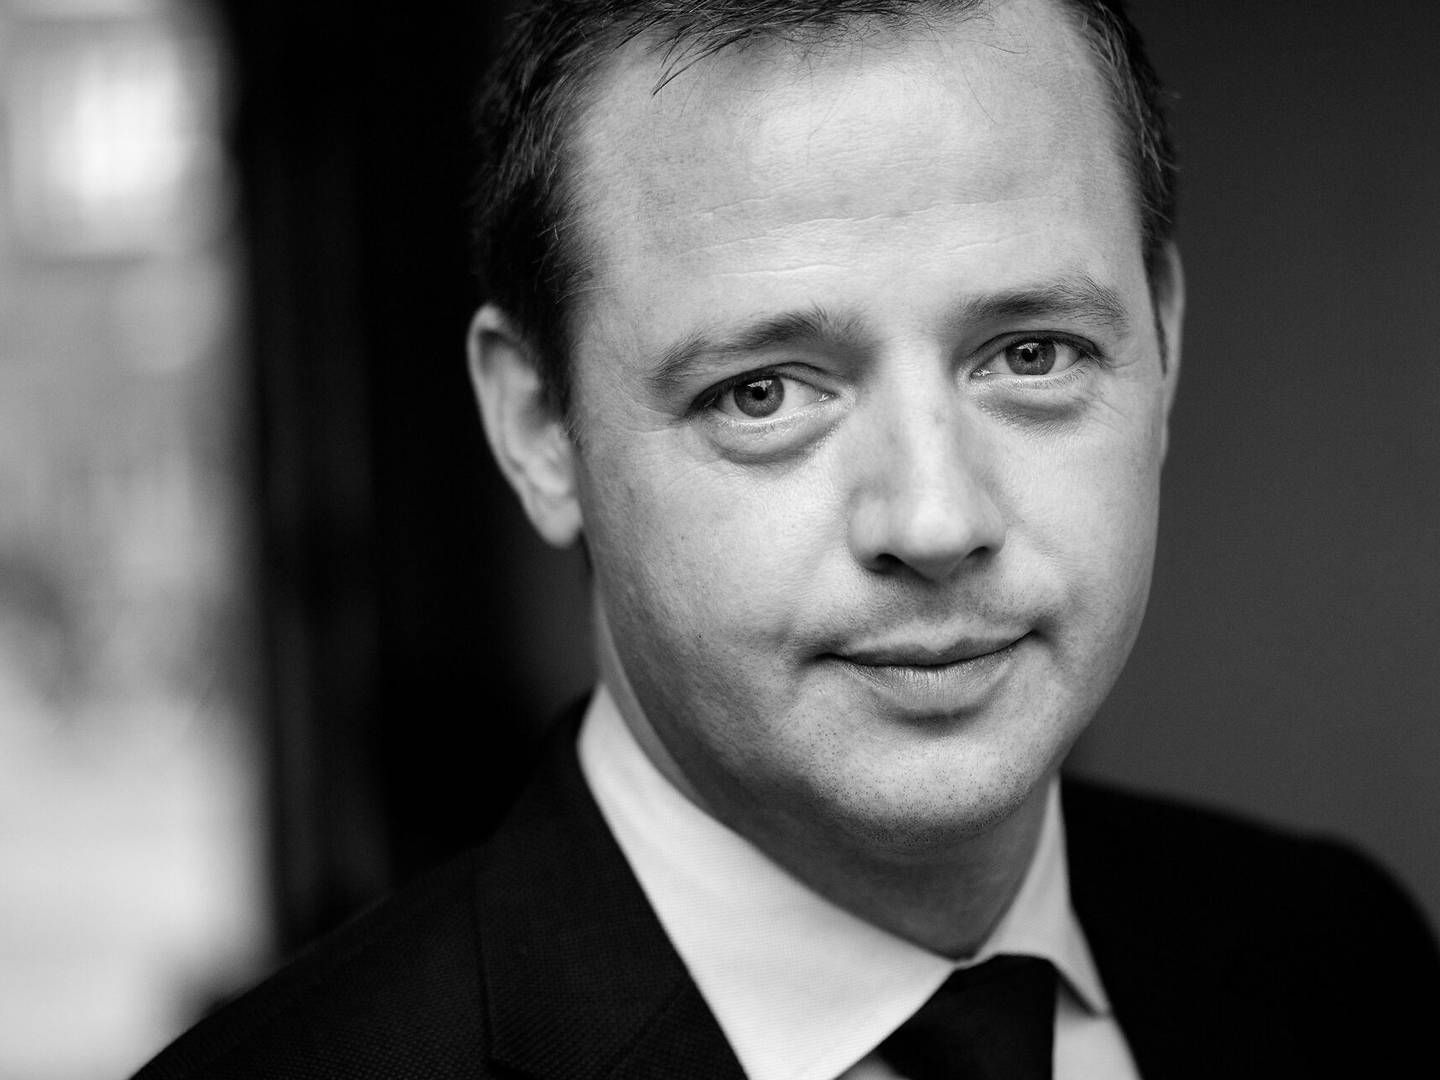 Venstres Thomas Danielsen bliver ny transportminister. | Foto: Peter Hove Olesen/Ritzau Scanpix